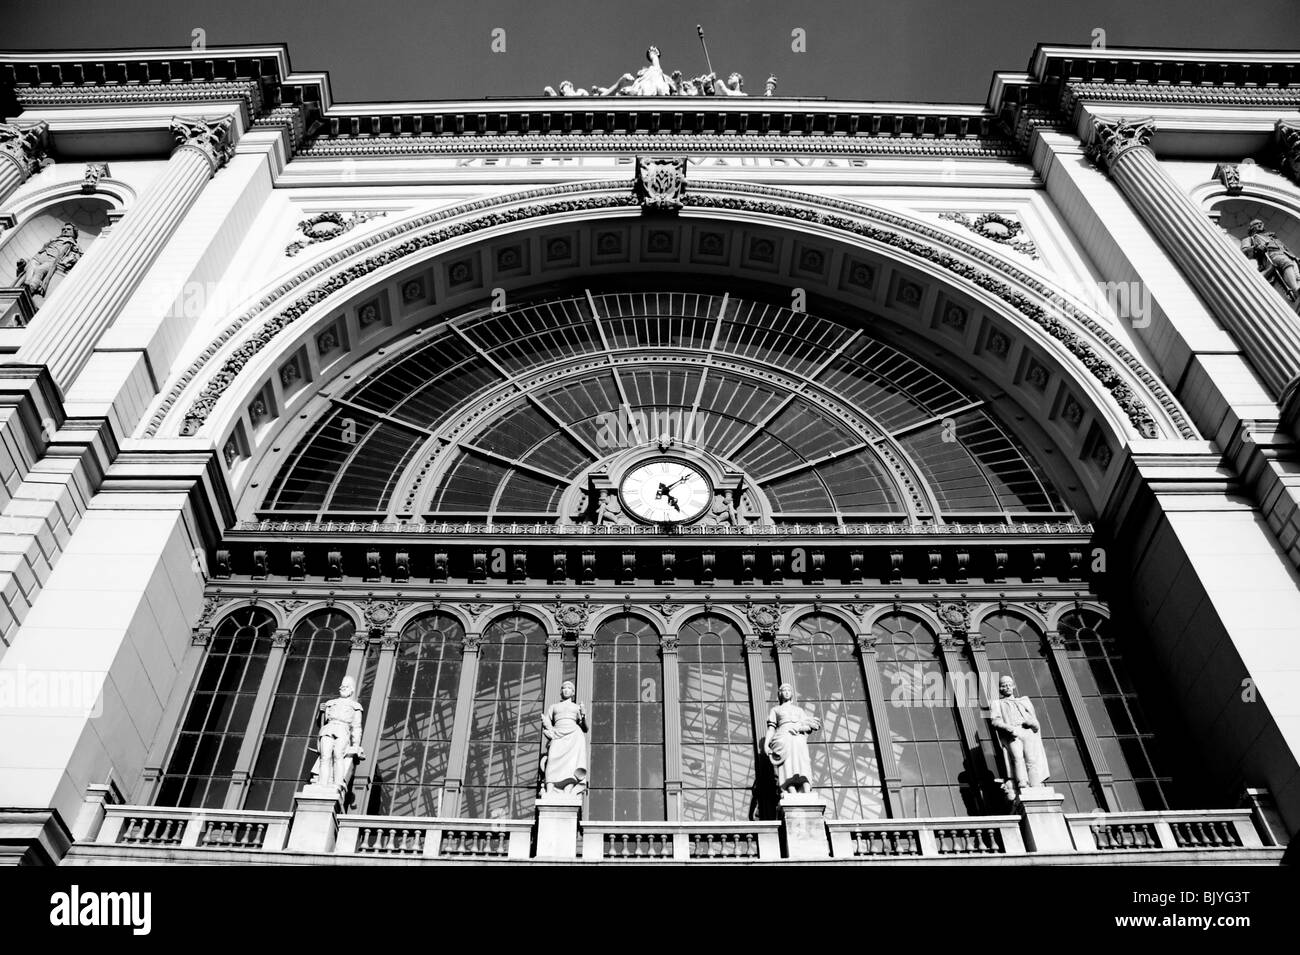 Keleti Railway Station clock, Budapest, Hungary Stock Photo